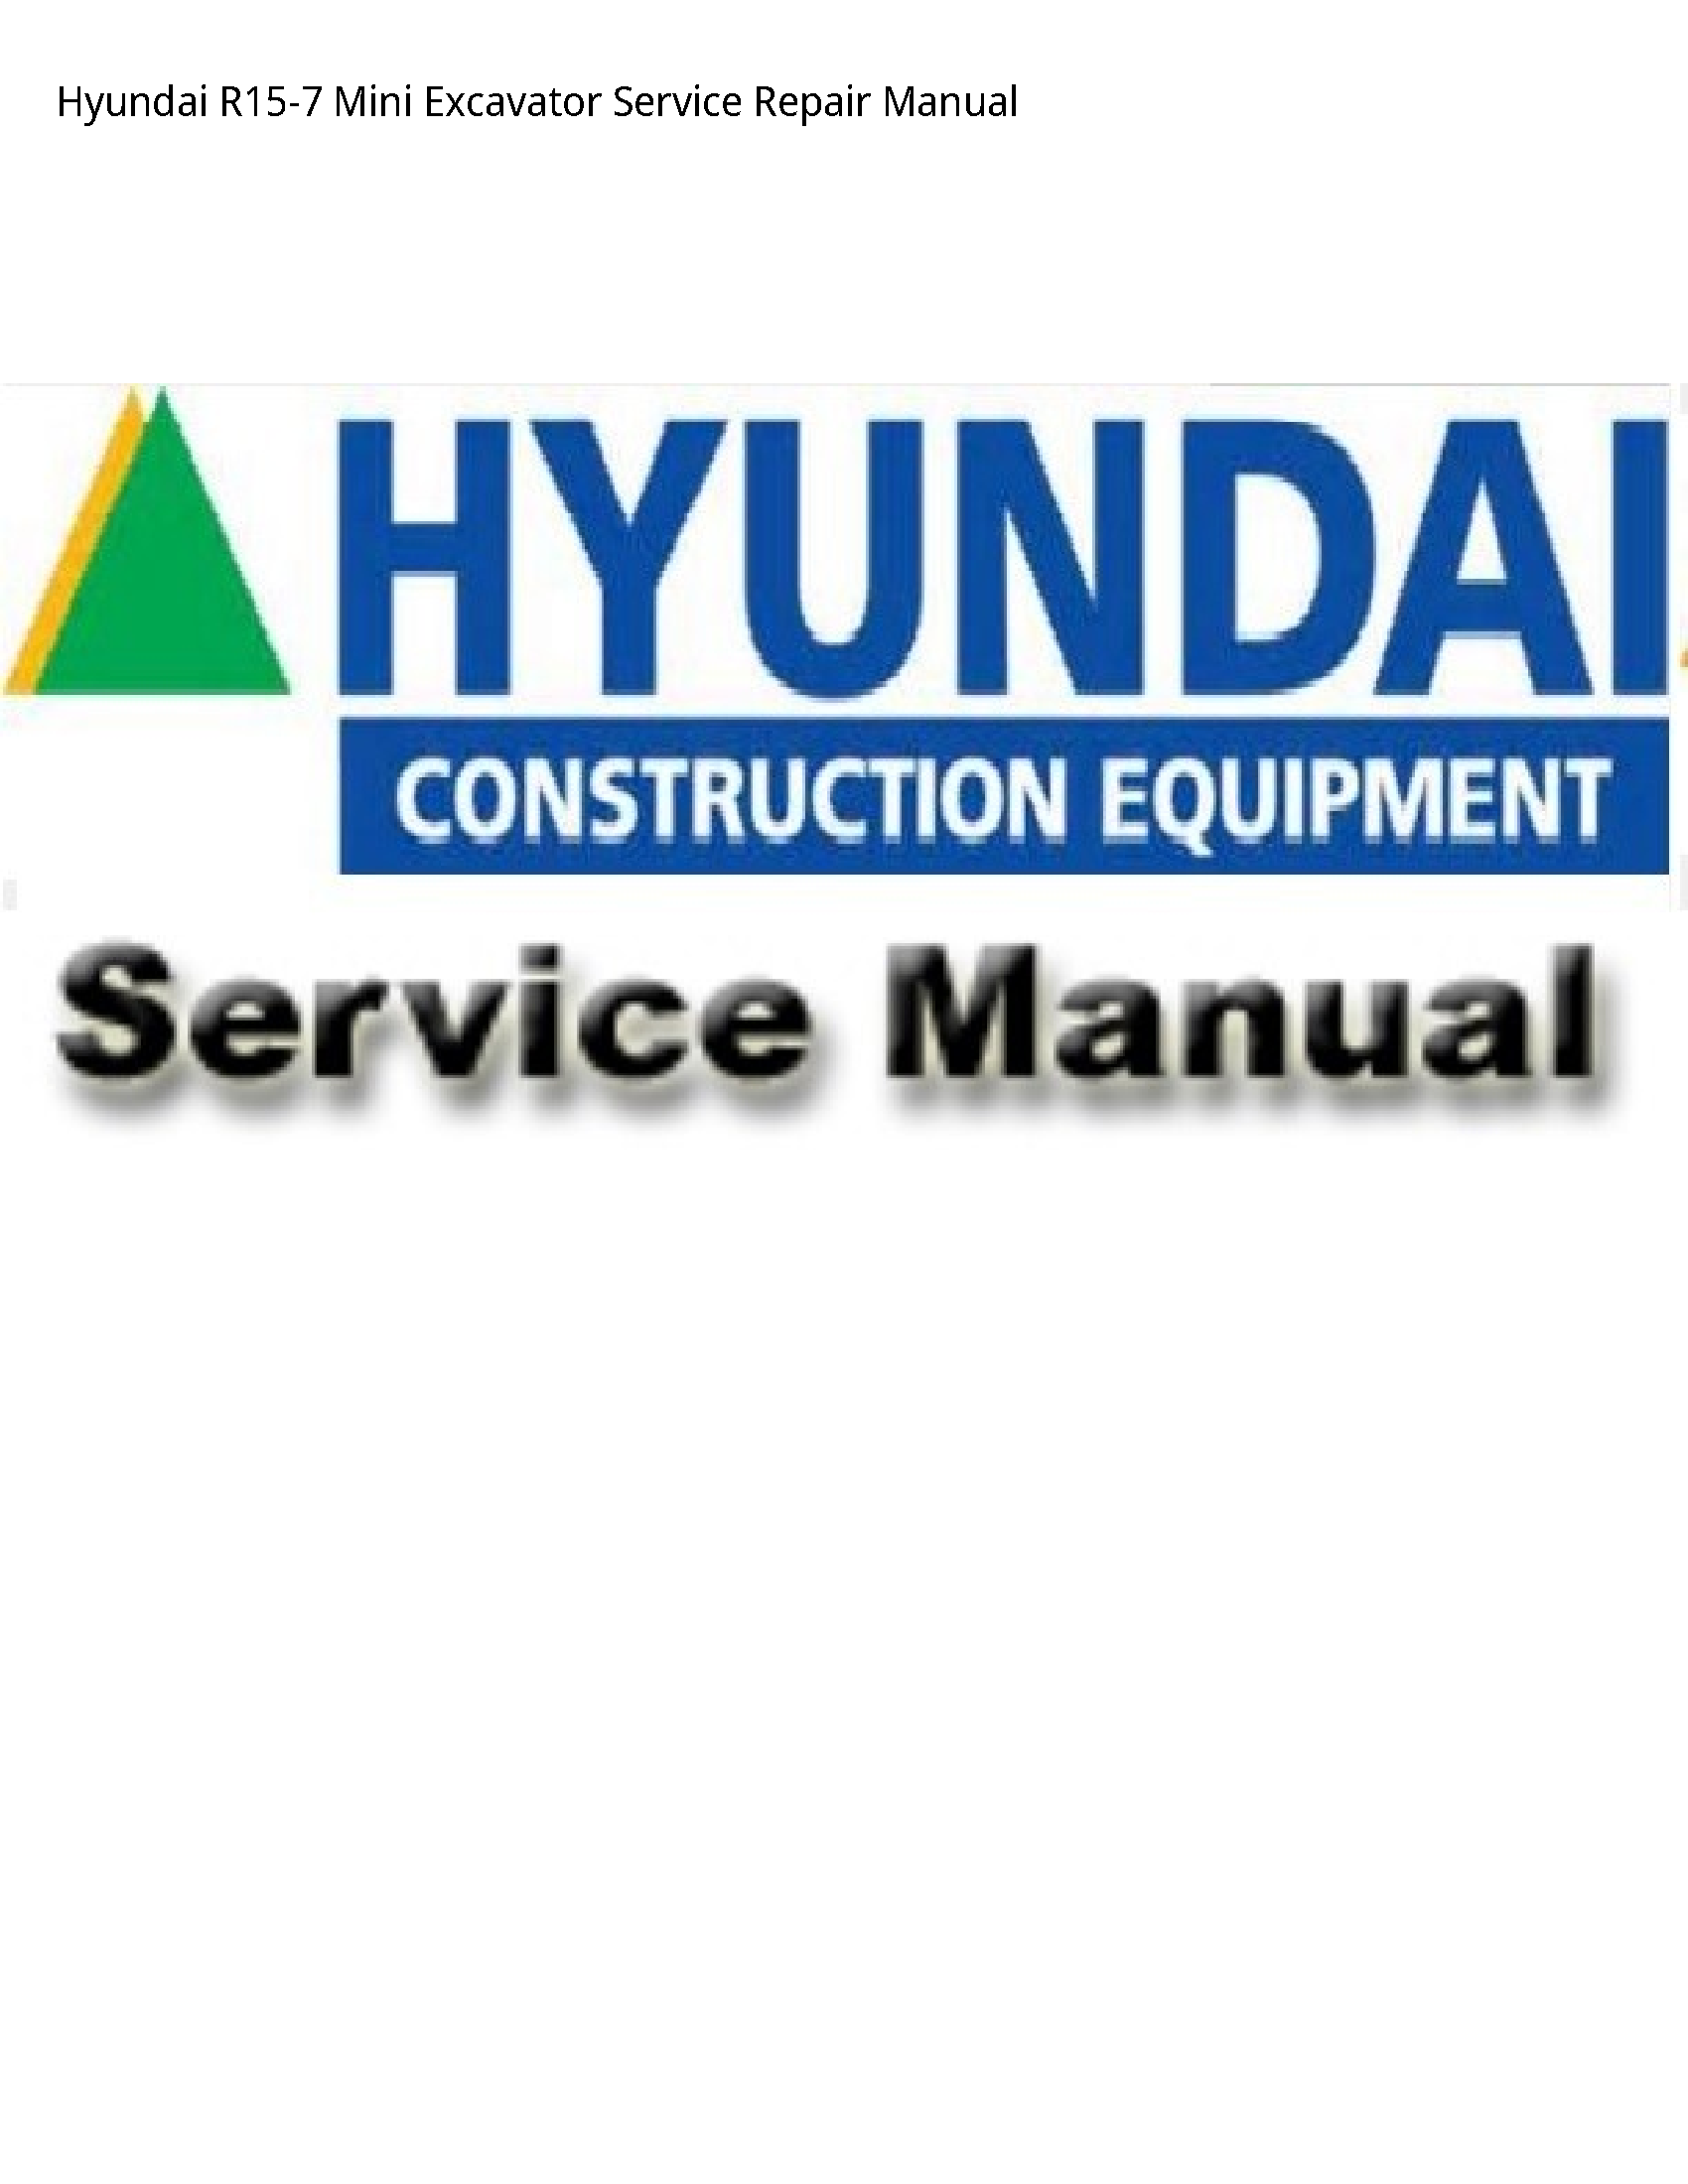 Hyundai R15-7 Mini Excavator manual